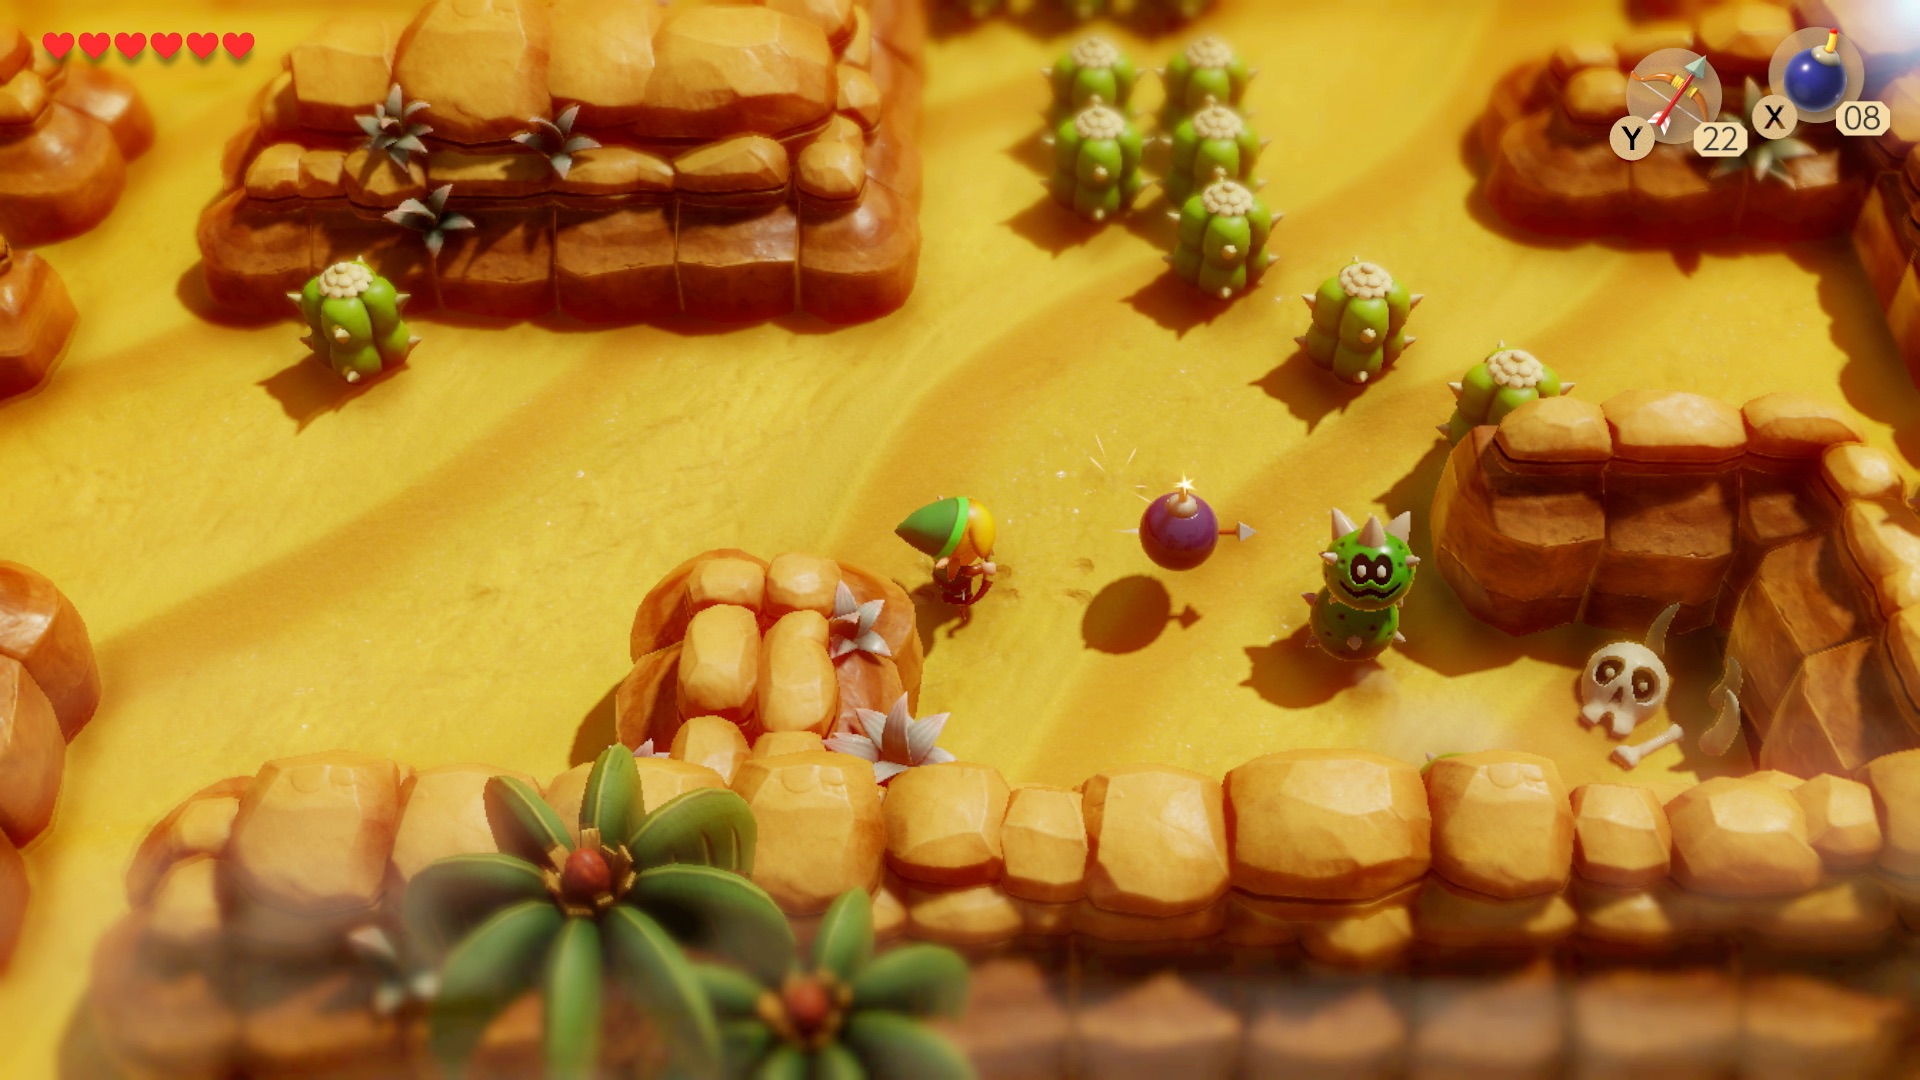  The Legend of Zelda: Link's Awakening: Dreamer Edition -  Nintendo Switch